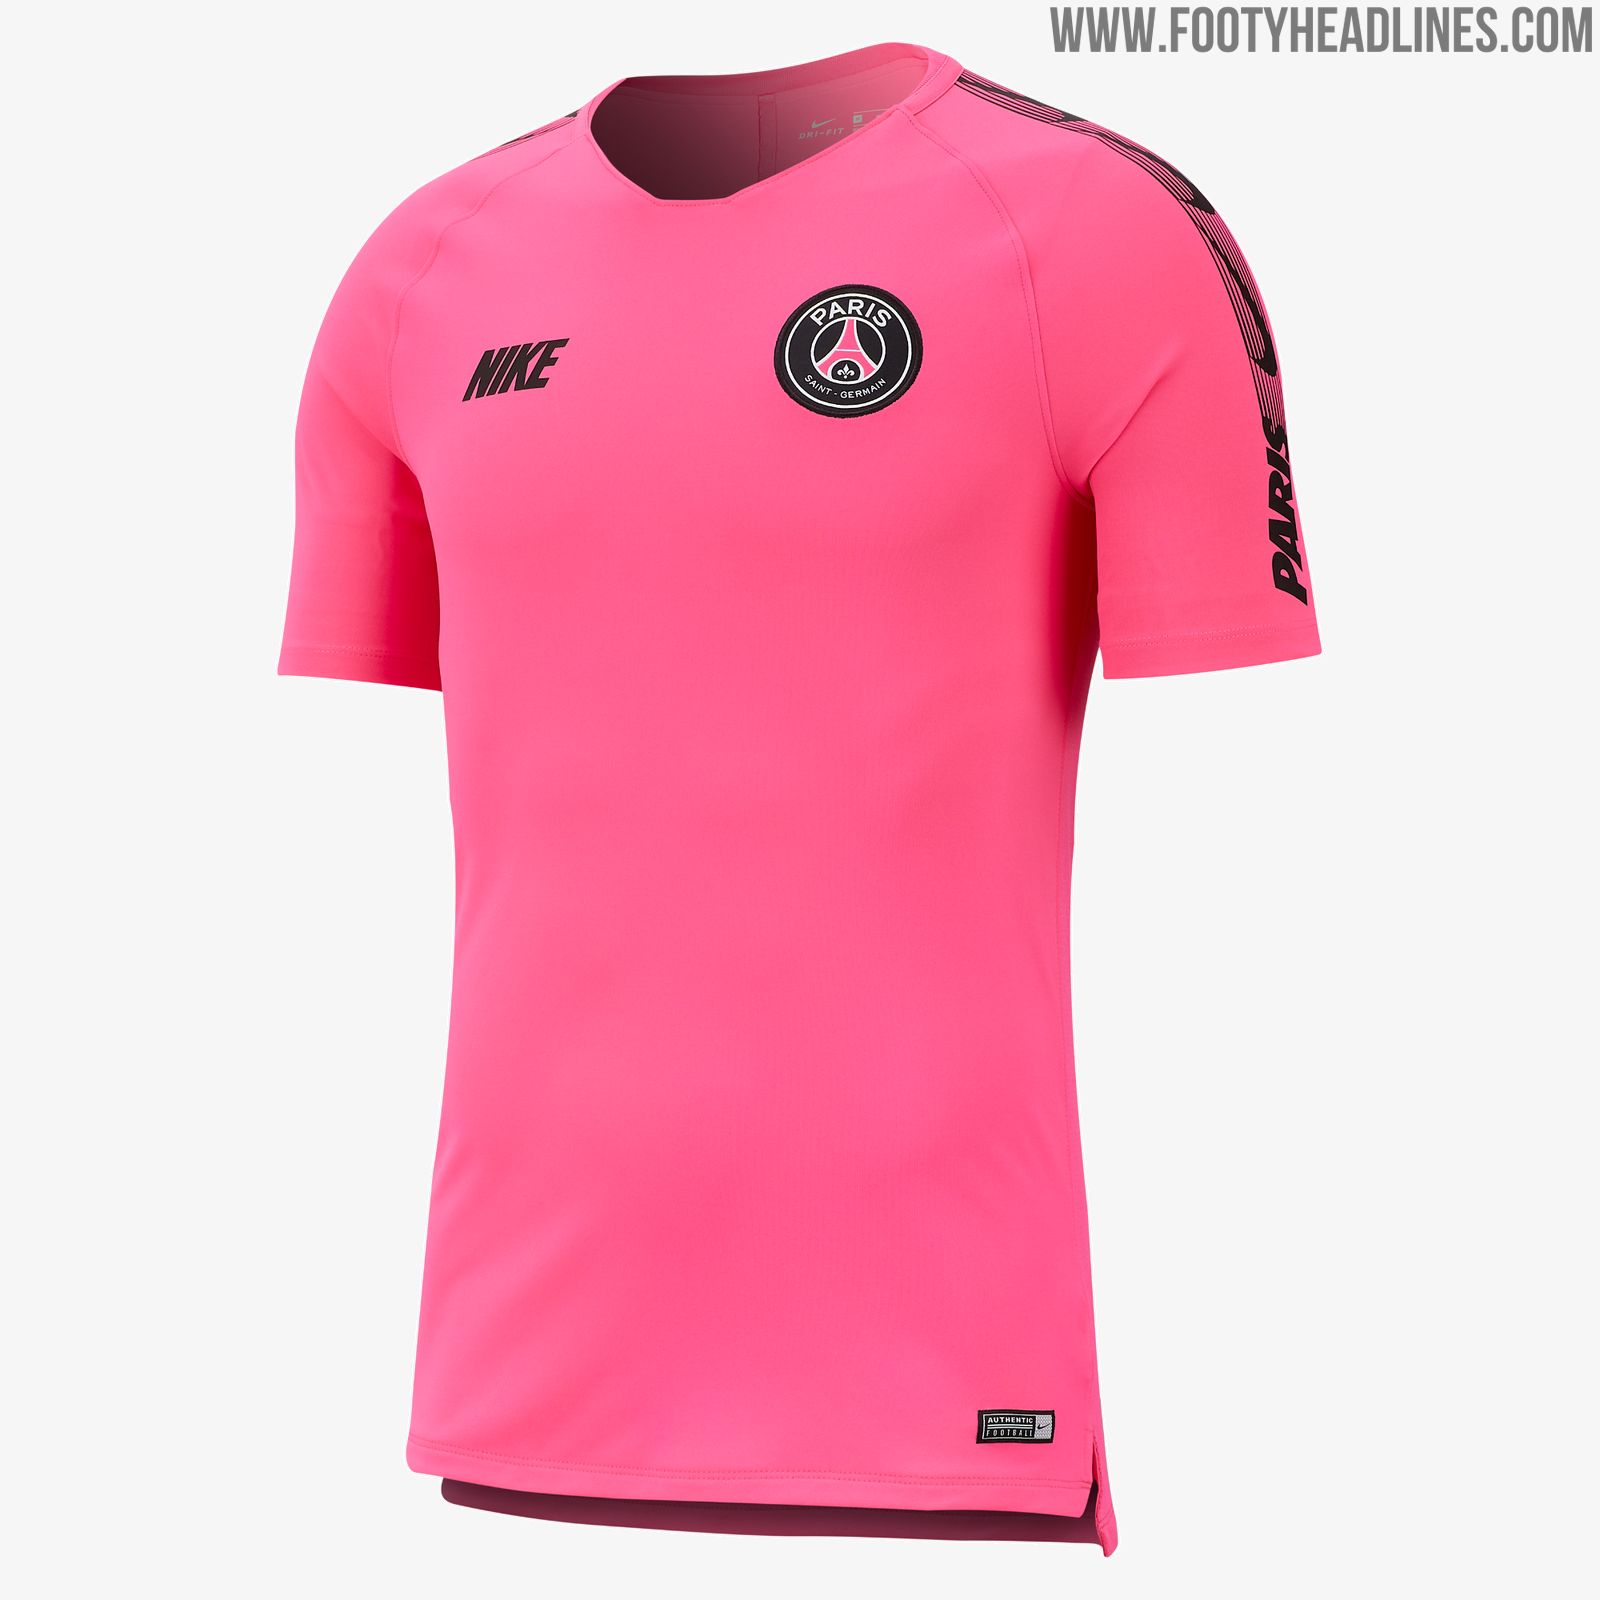 New Nike Style Pink PSG 2019 Training Kit Released  Footy Headlines